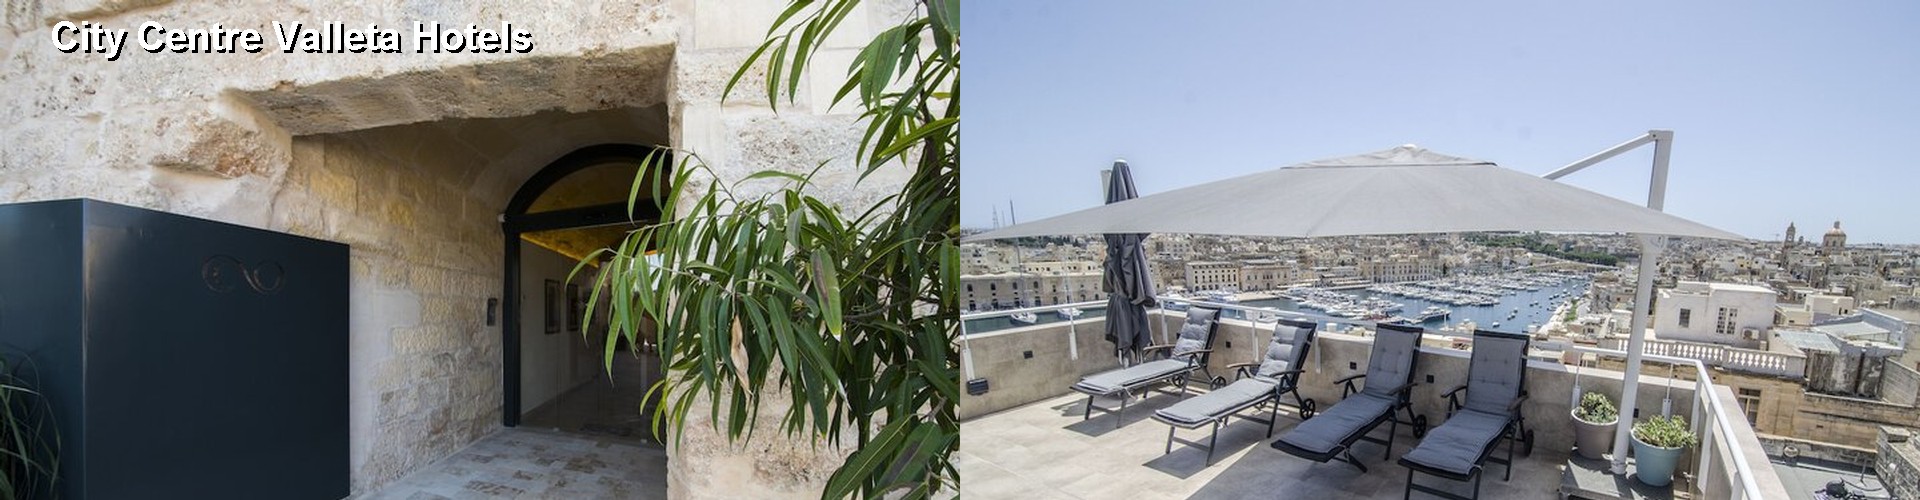 5 Best Hotels near City Centre Valleta